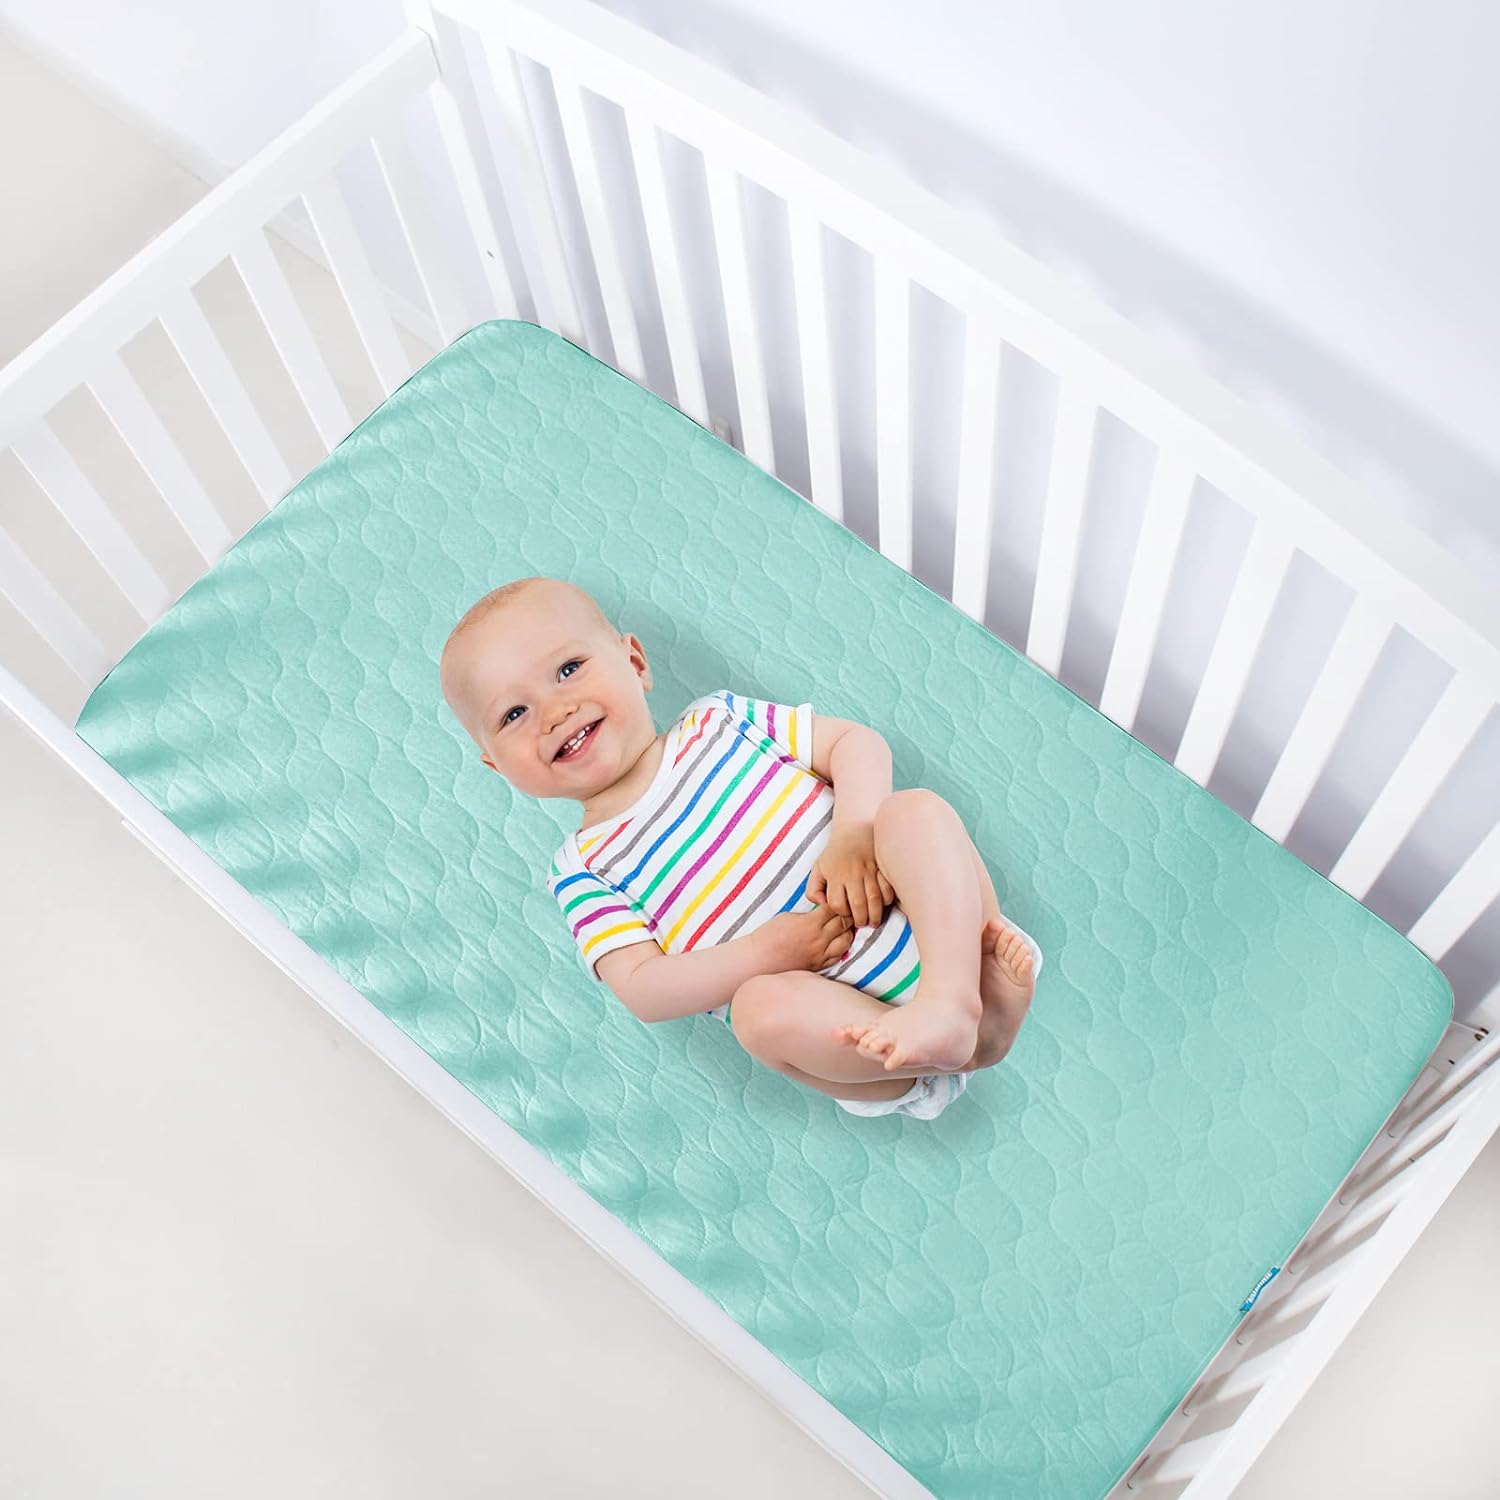 Crib Mattress Protector/ Pad Cover - Quilted Microfiber, Waterproof (for Standard Crib/ Toddler Bed), Aqua - Biloban Online Store